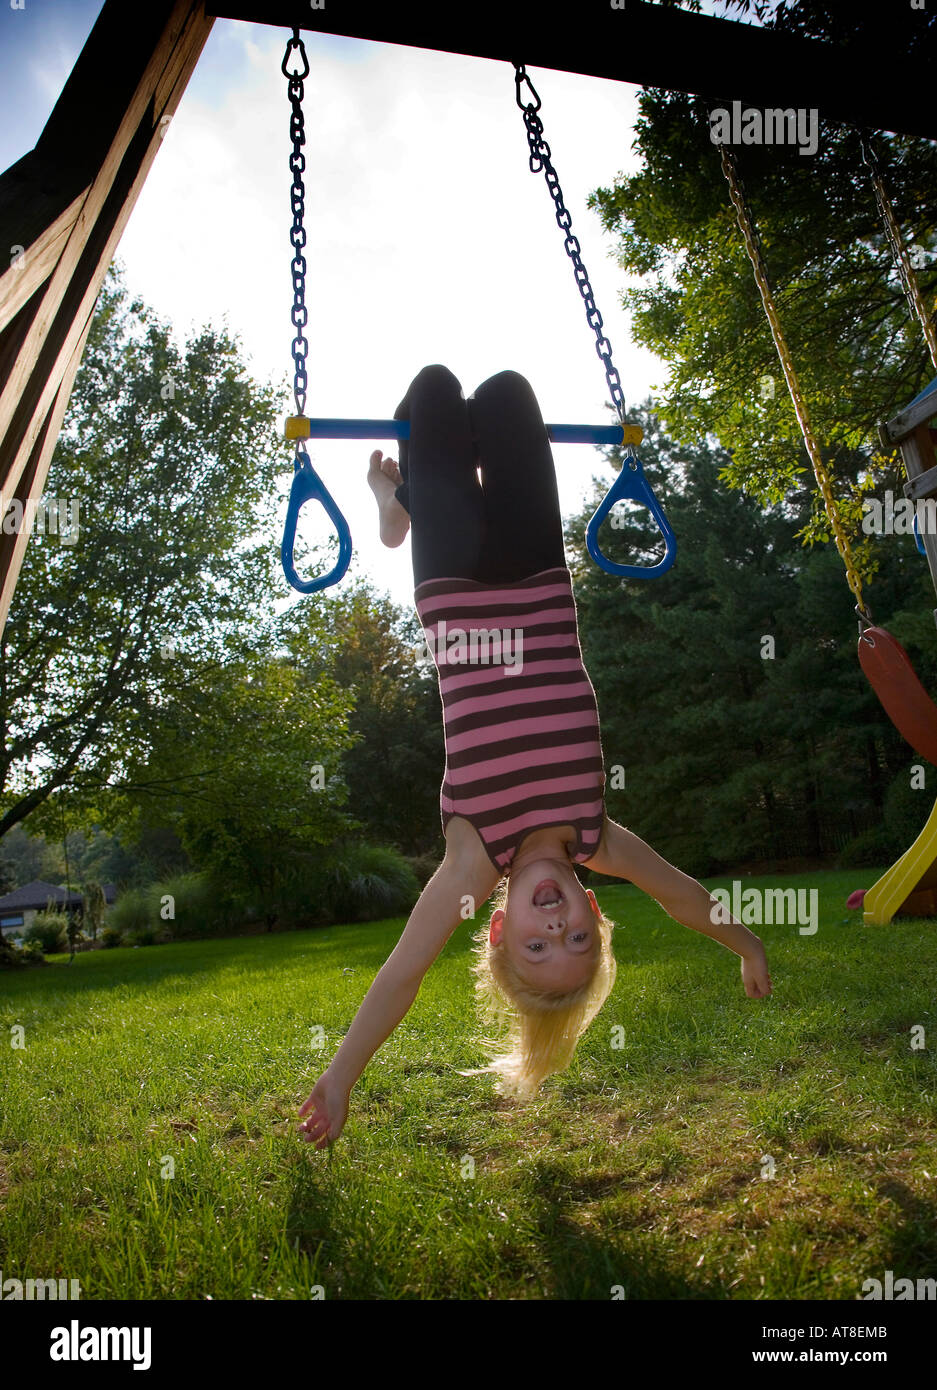 Child swinging upside down on a backyard swing Stock Photo